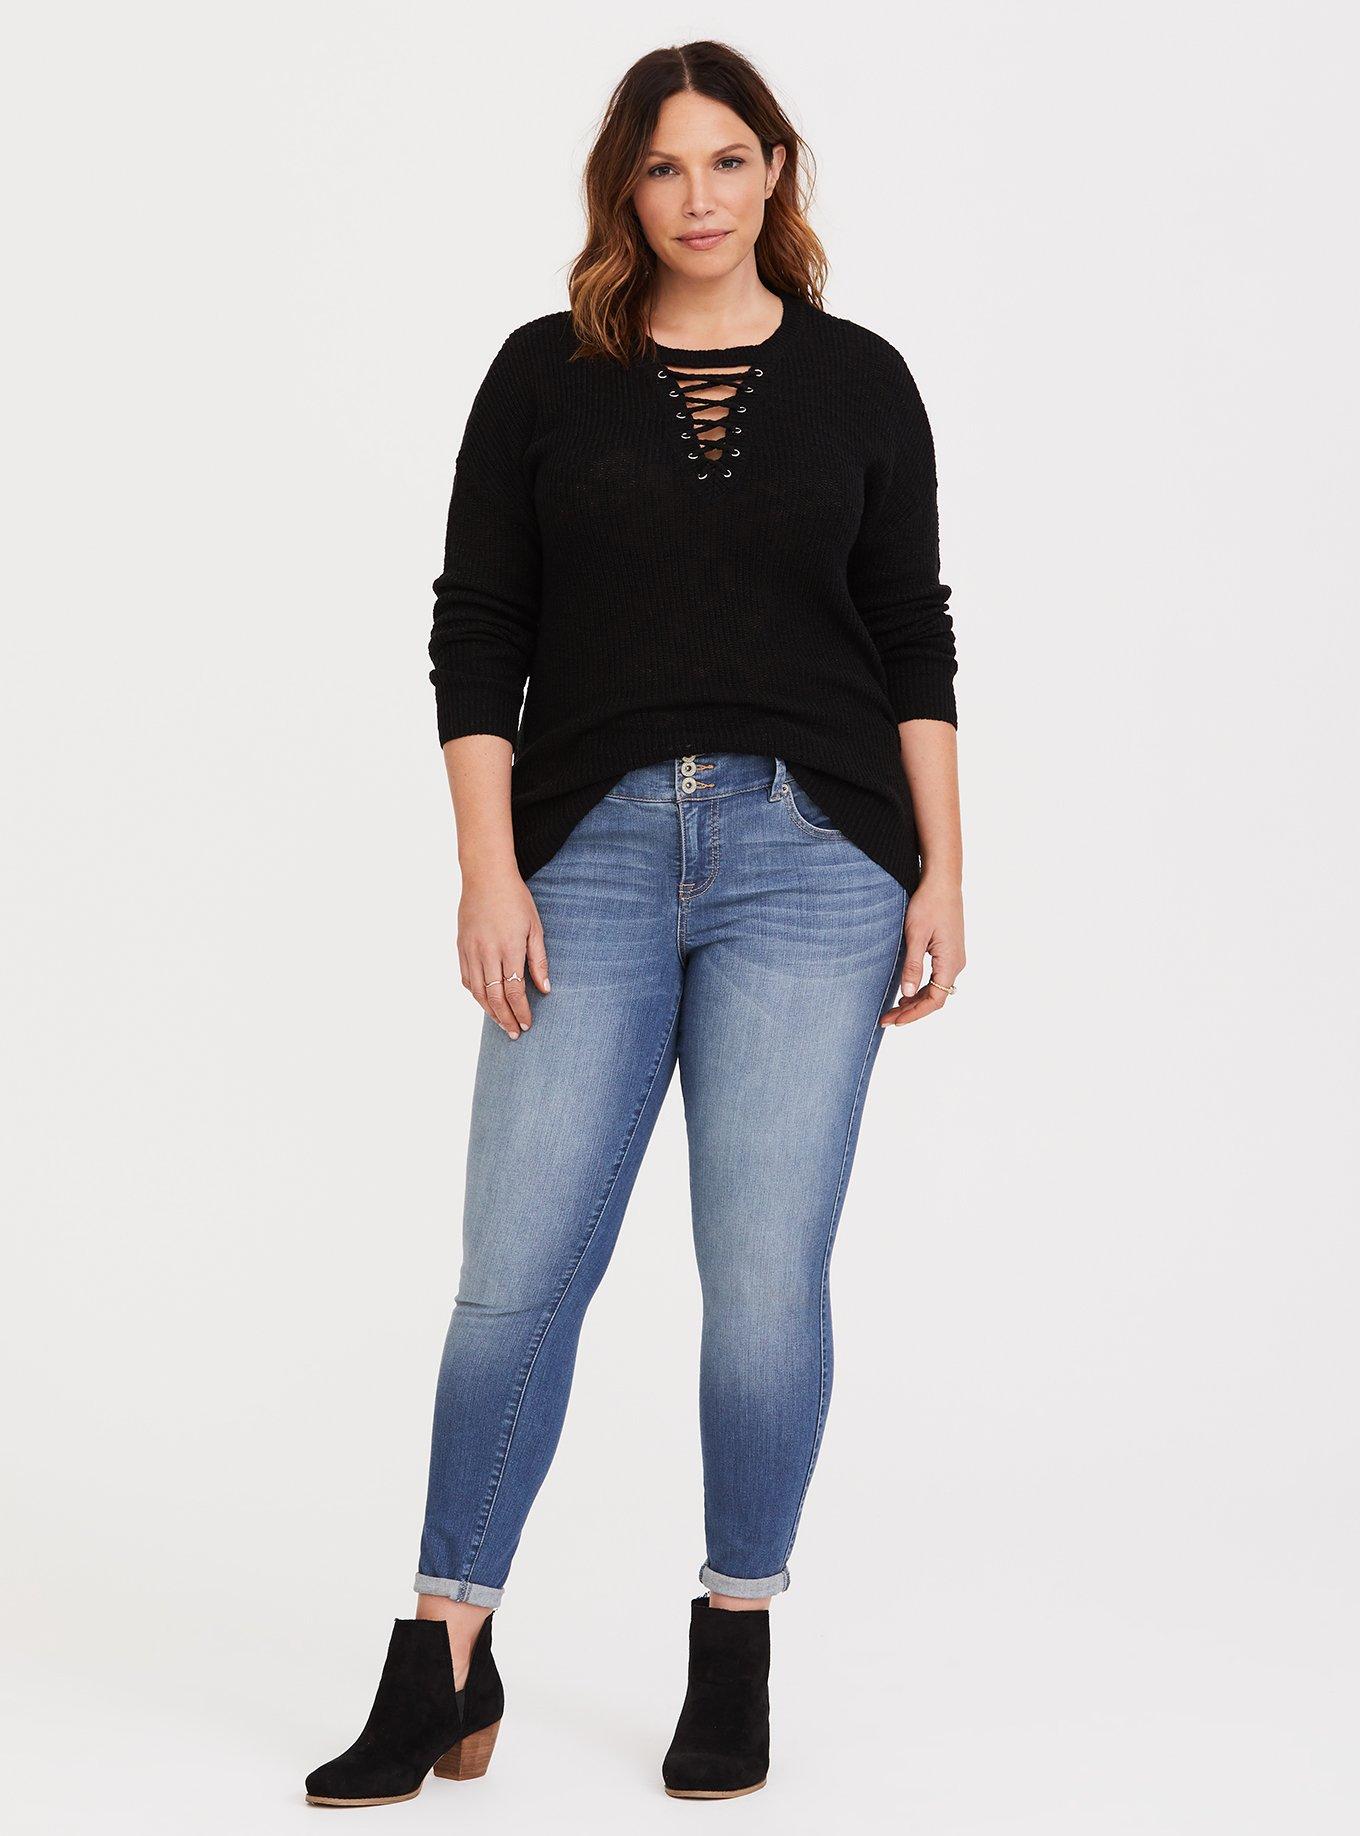 Plus Size - Black Lace-Up Dolman Knit Pullover - Torrid